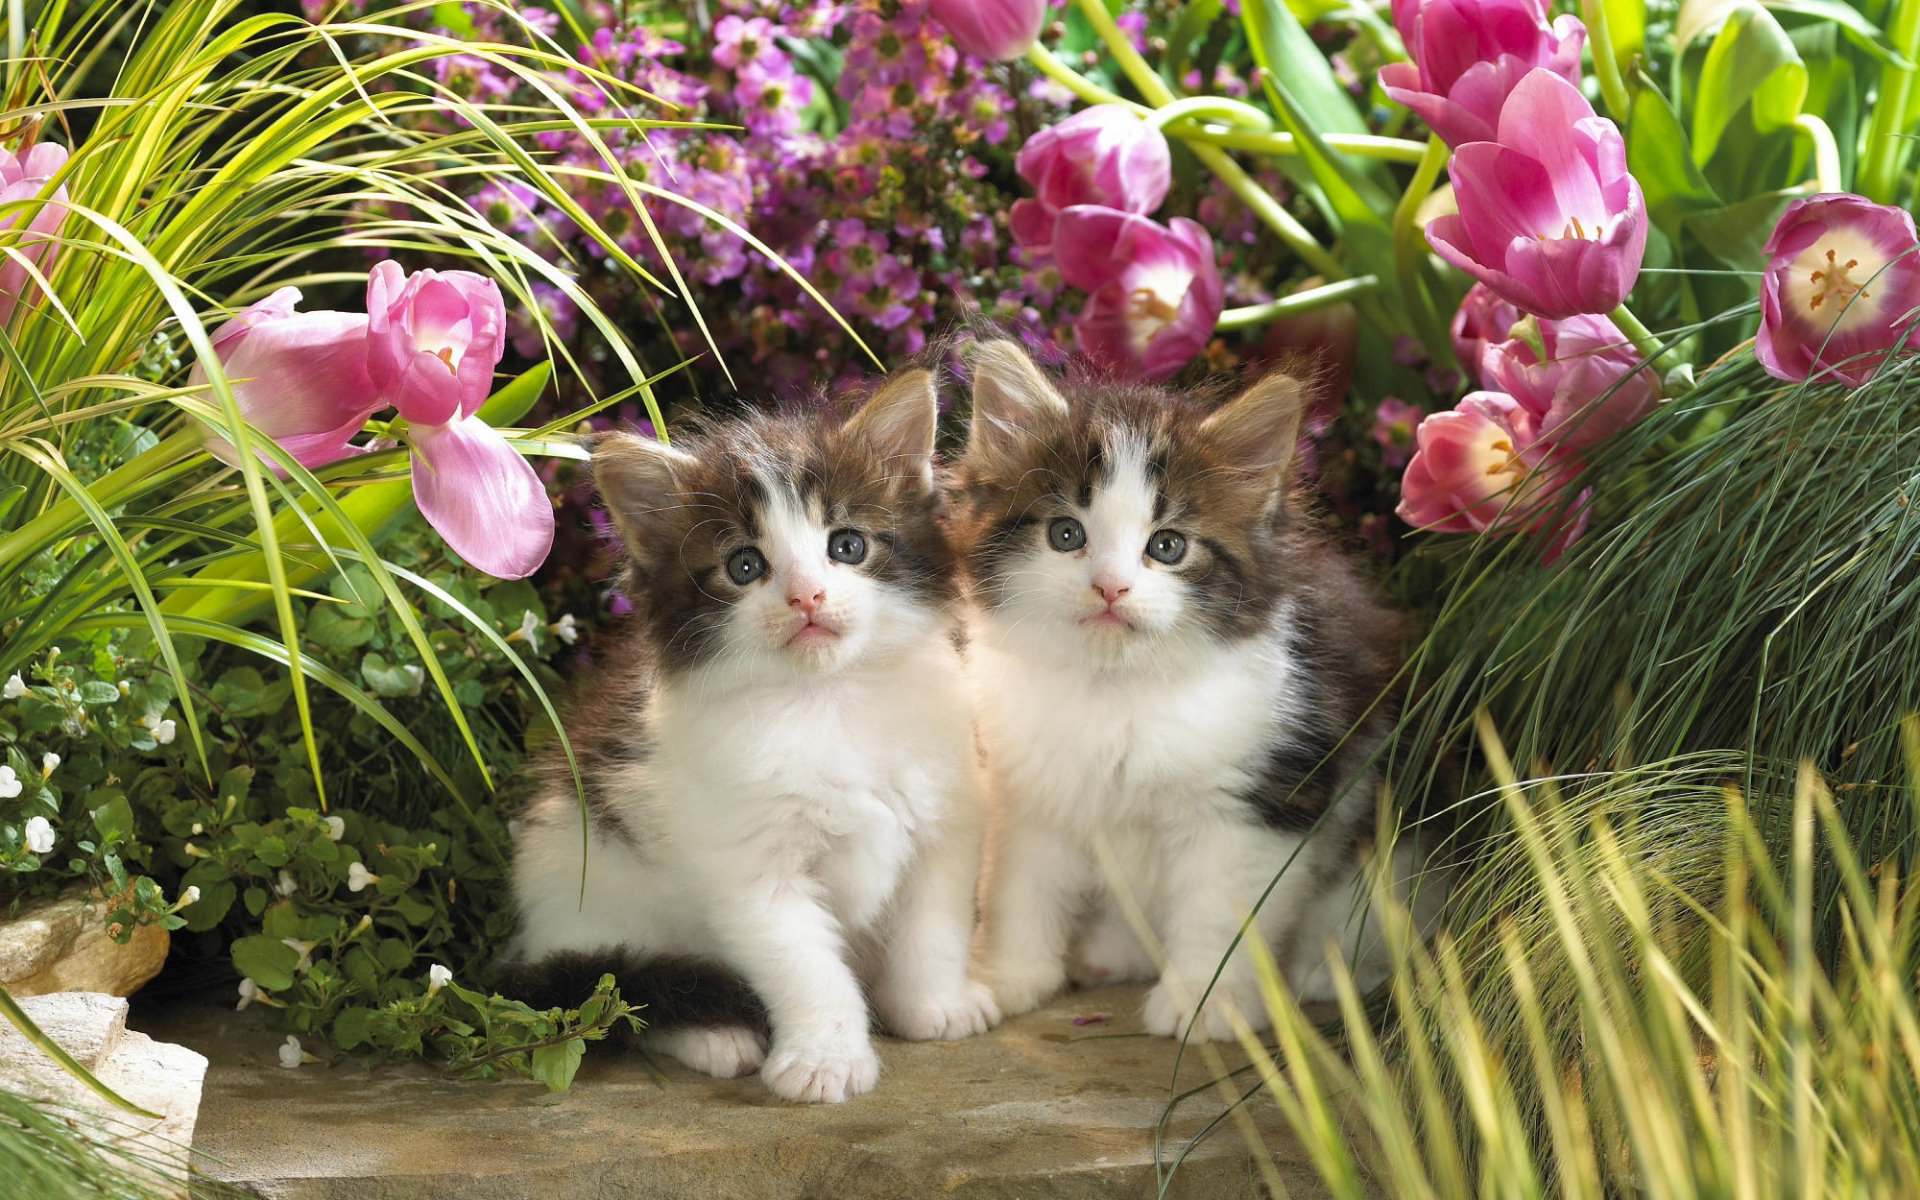 Kittens by Scott Ford